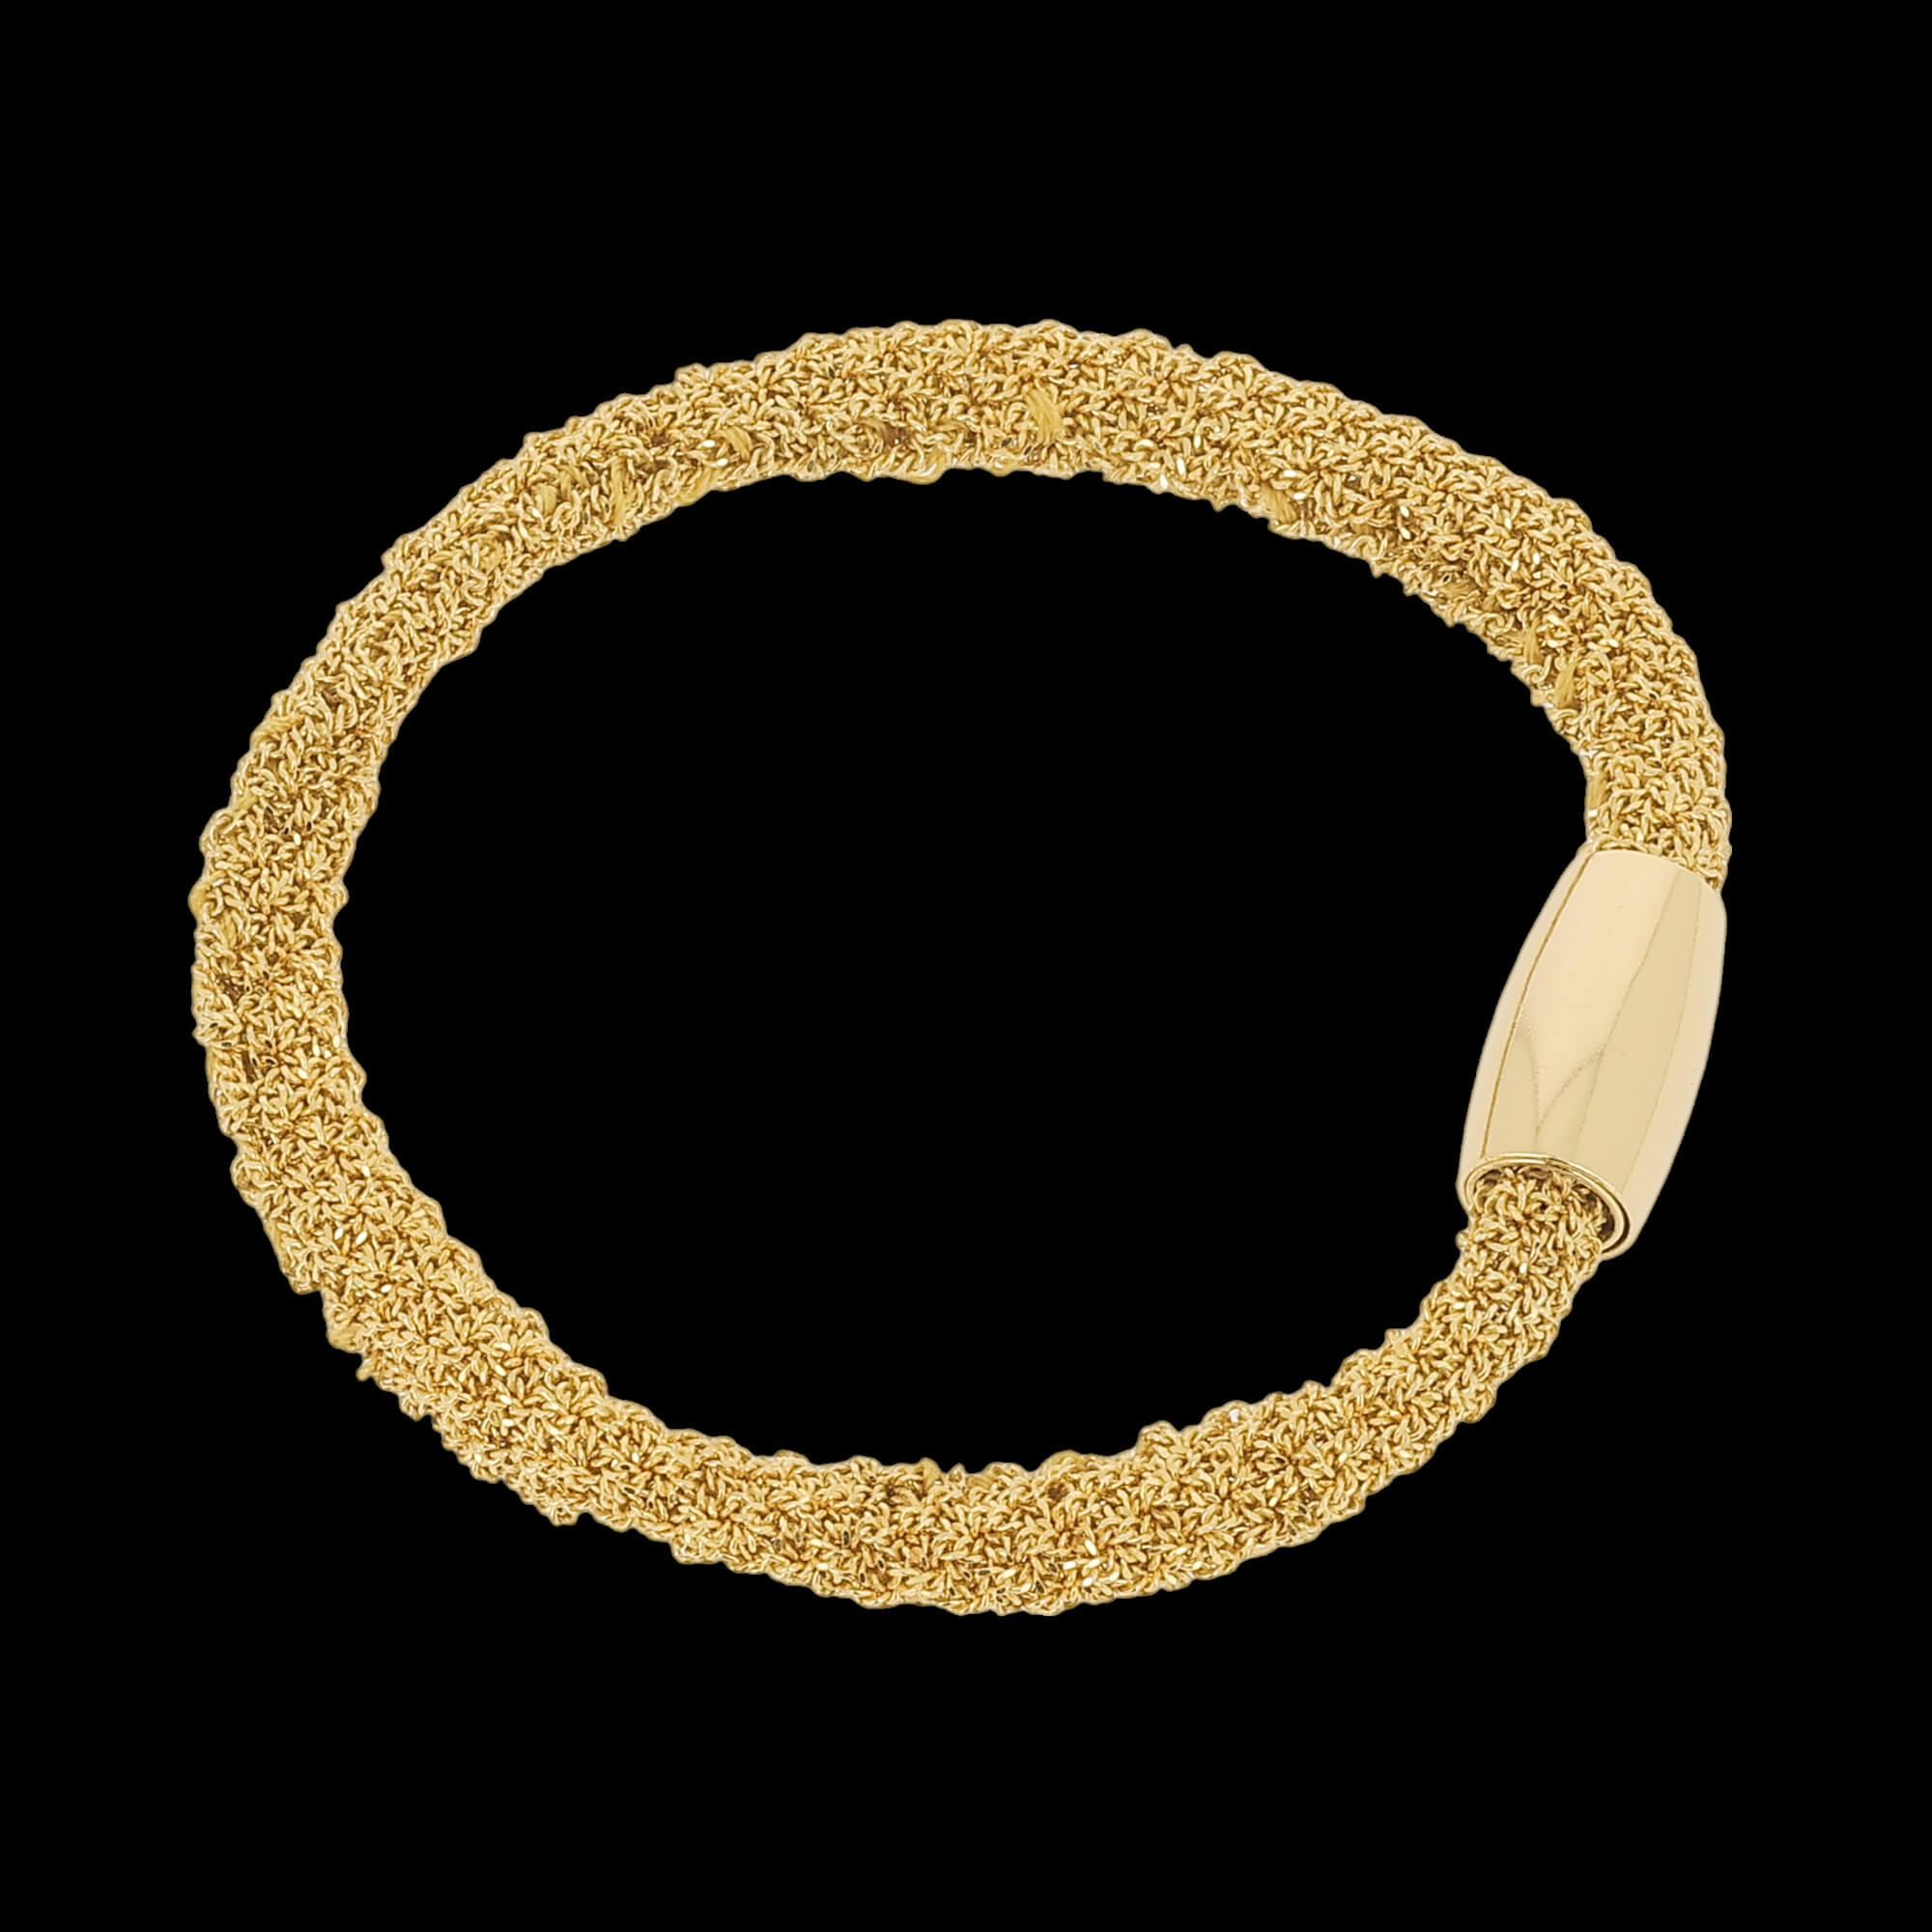 Narrow gilt intertwined bracelet